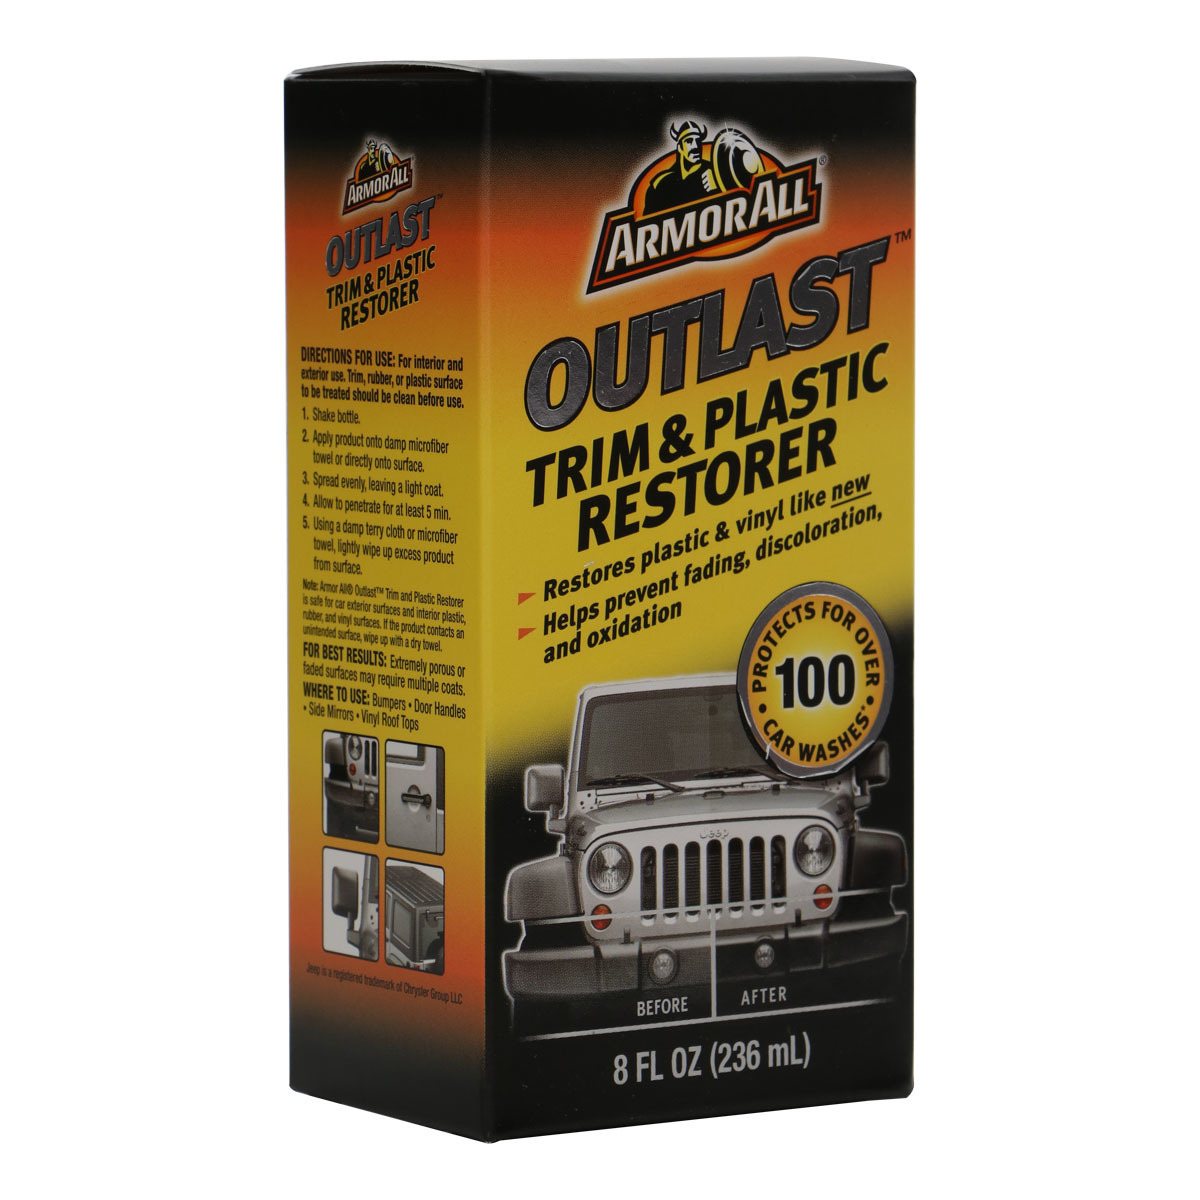 Armor All Outlast Trim & Plastic Restorer - 8 fl oz